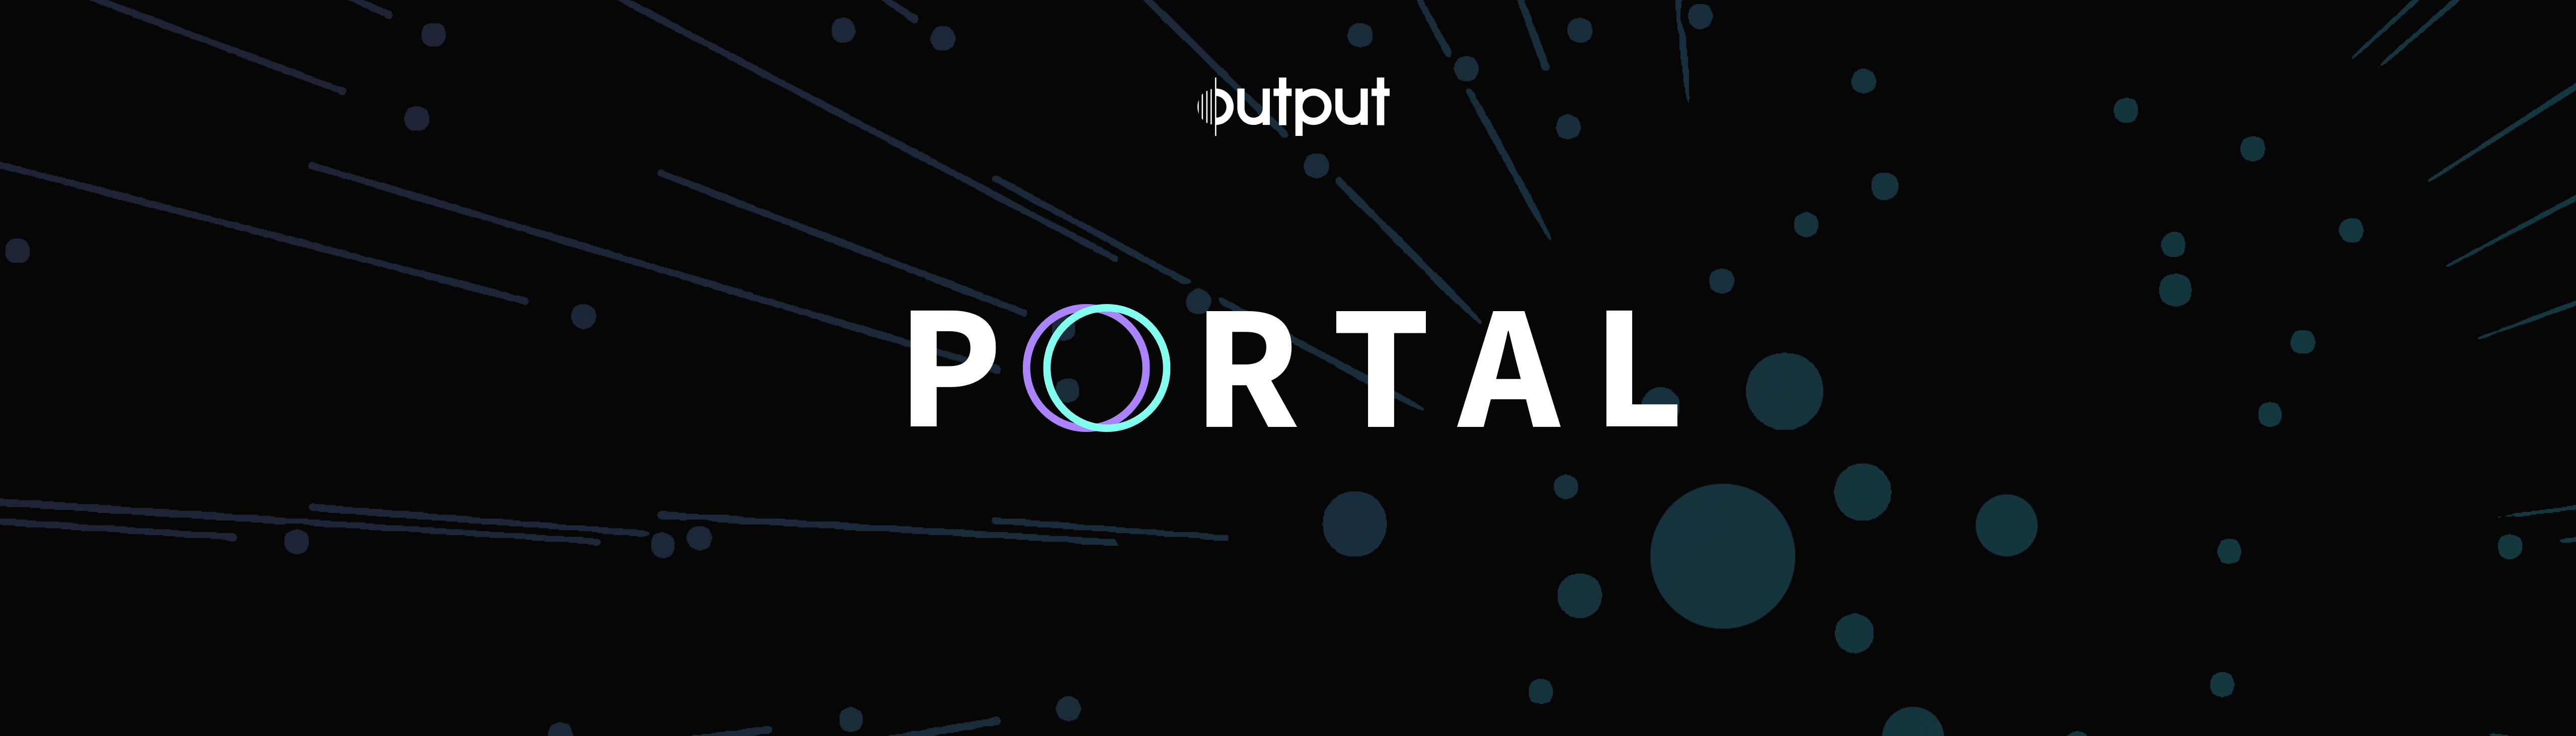 Output PORTAL